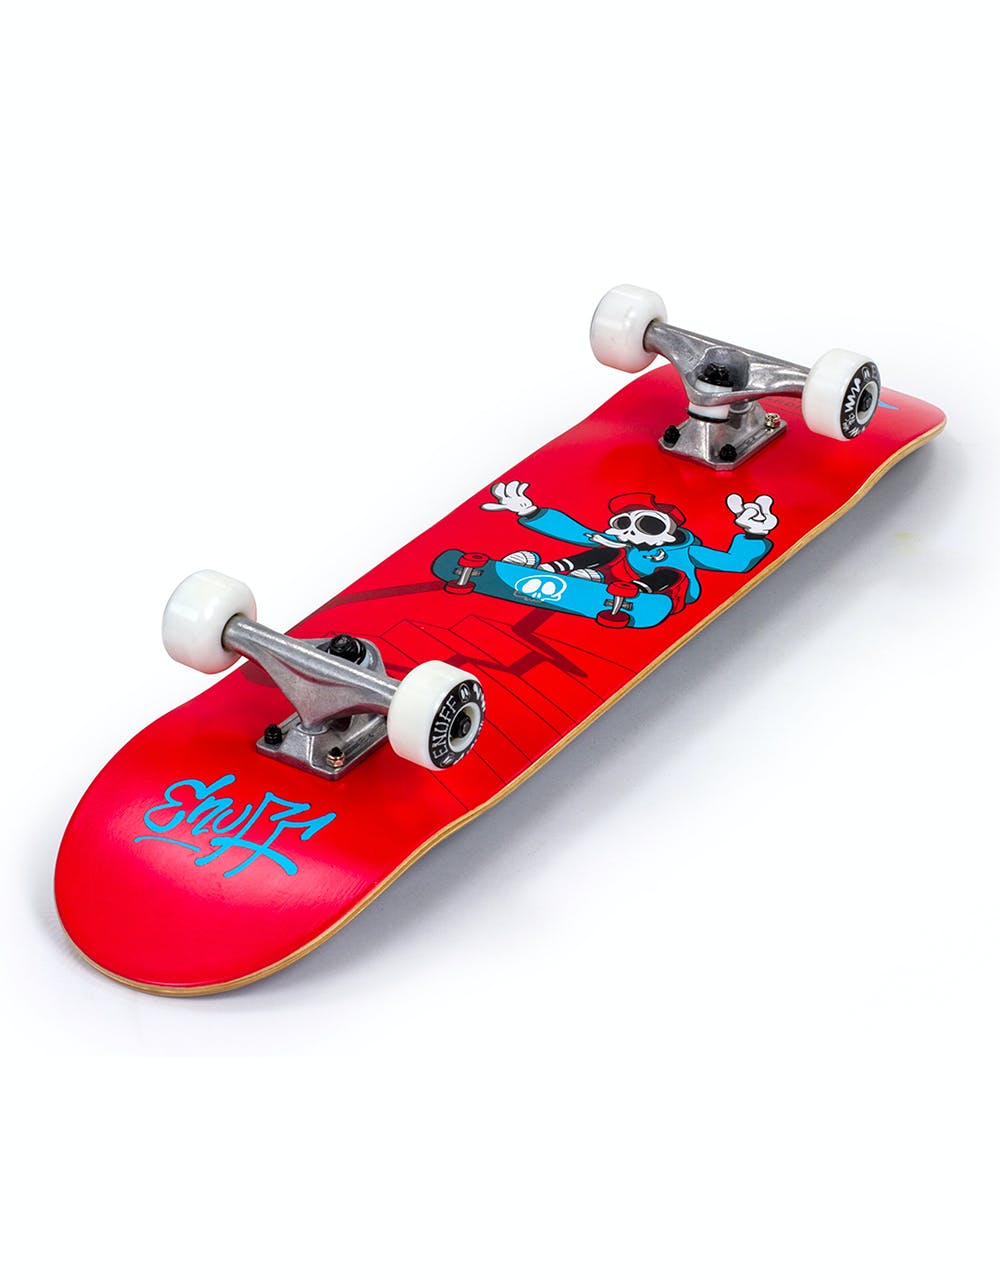 Enuff Skully Mini Complete Skateboard - 7.25"